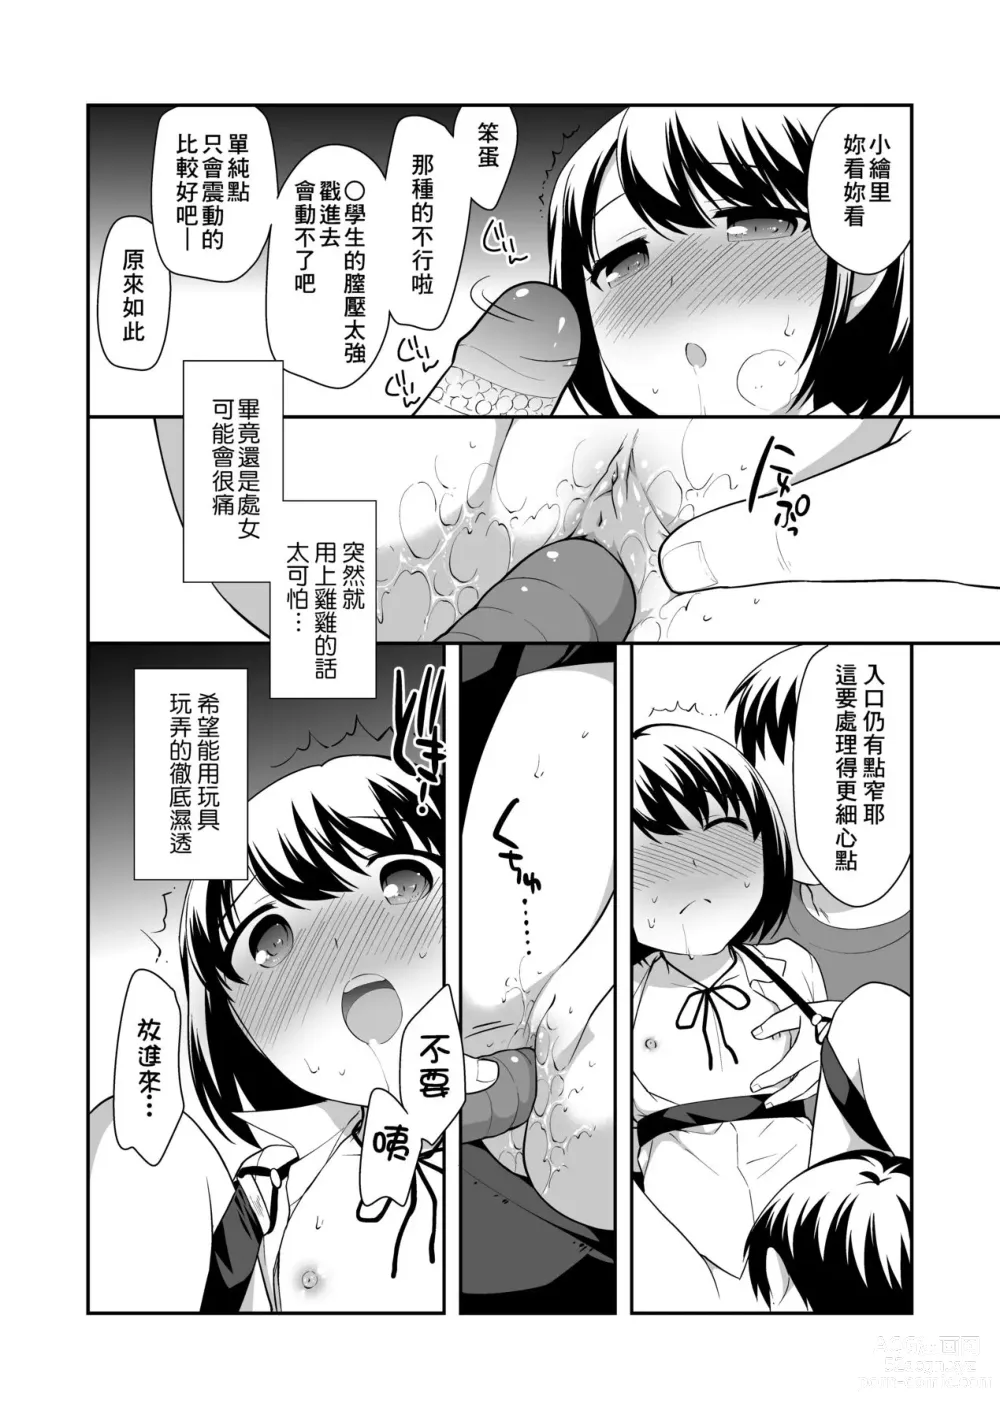 Page 193 of manga Loli Kuri Gohan (decensored)